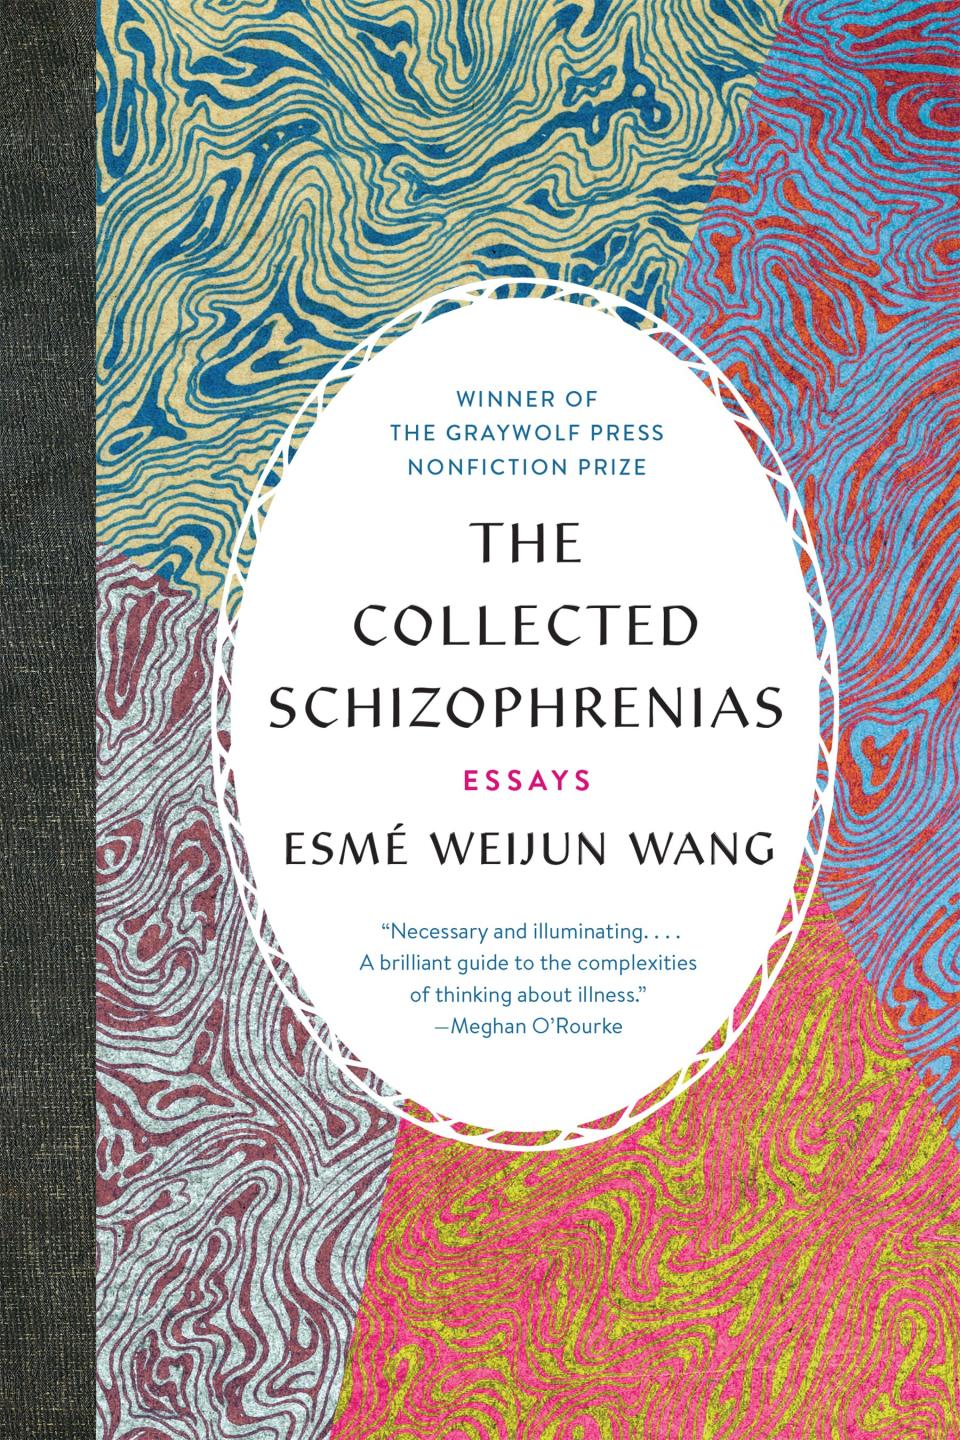 The Collected Schizophrenias by Esmé Weijun Wang (February 5)